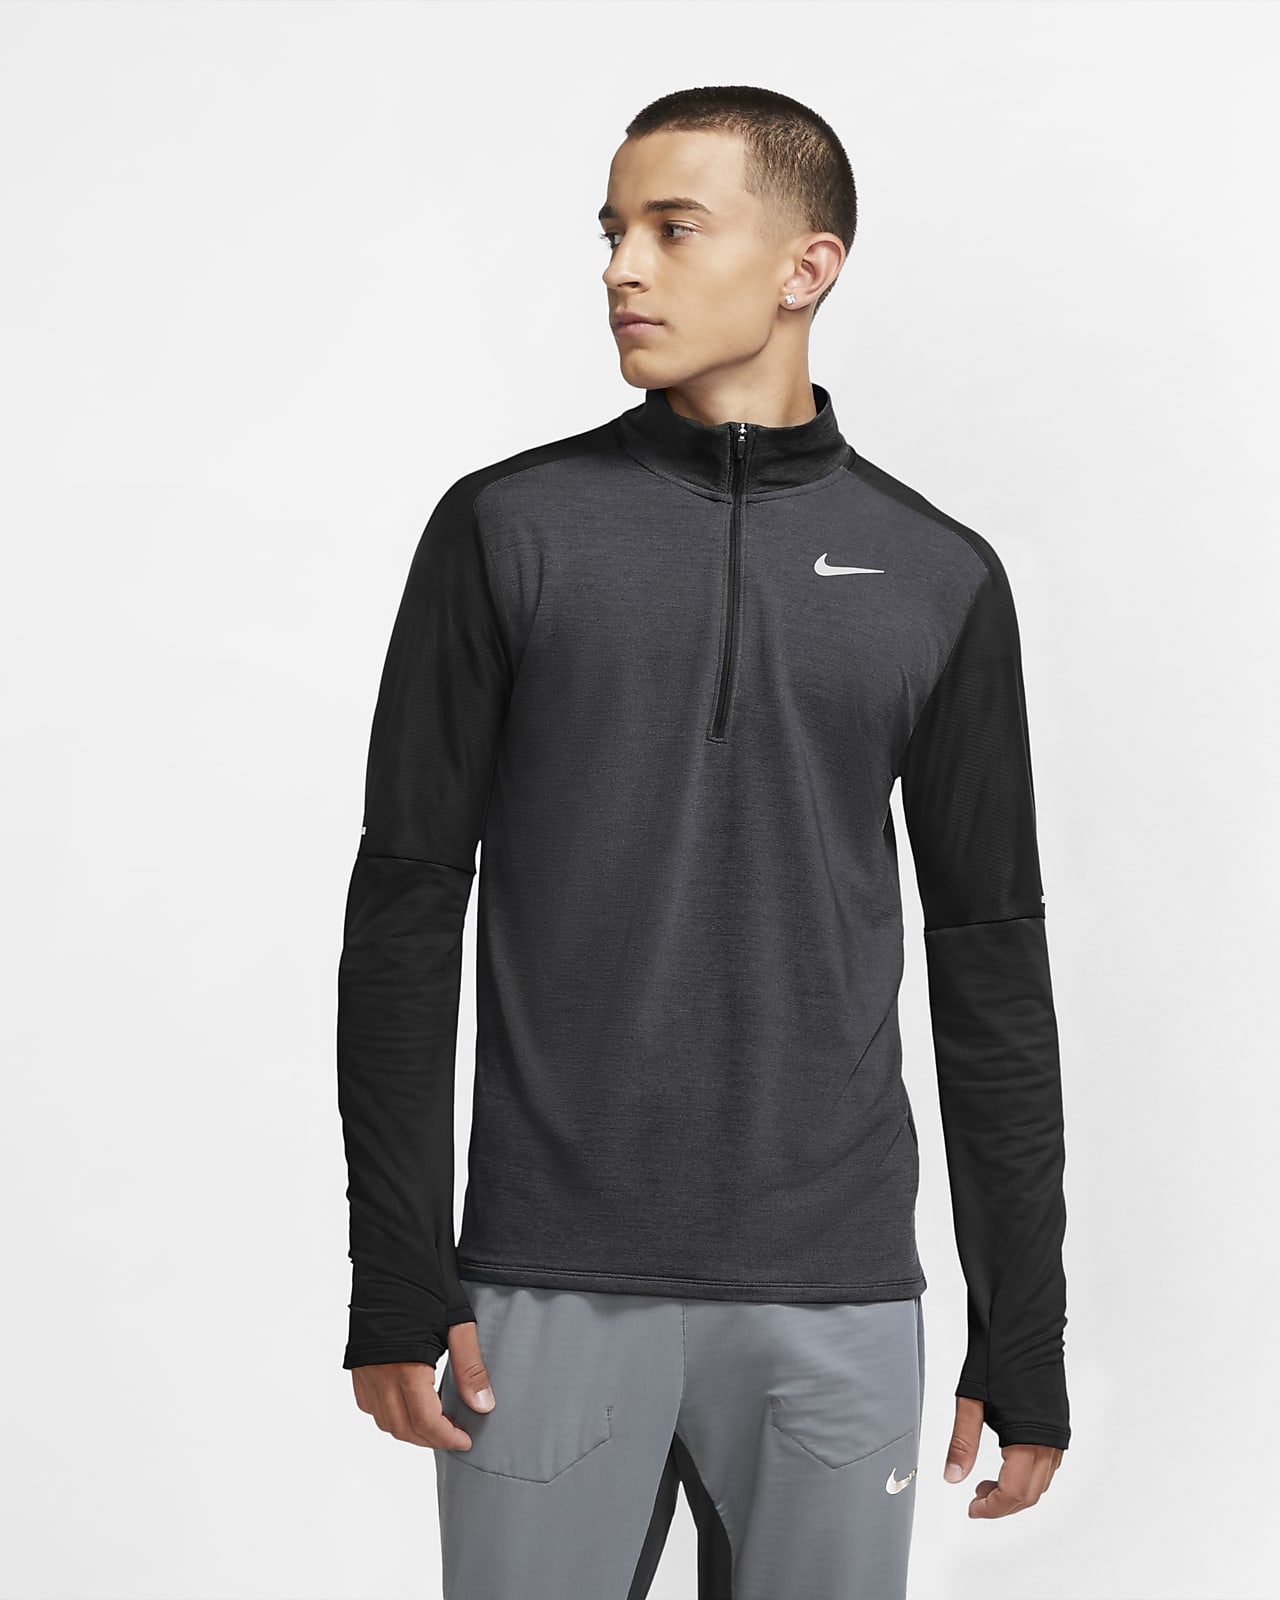 Nike Dri-FIT Men's 1/2-Zip Running Top